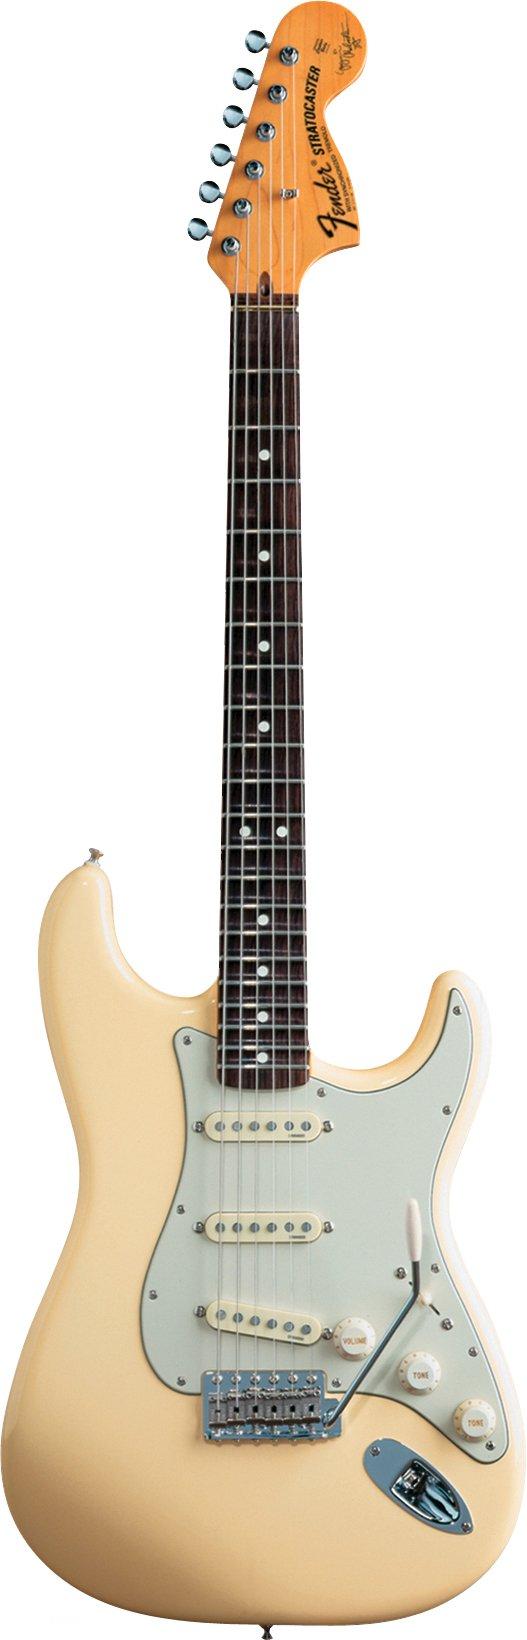 Yngwie Malmsteen Stratocaster